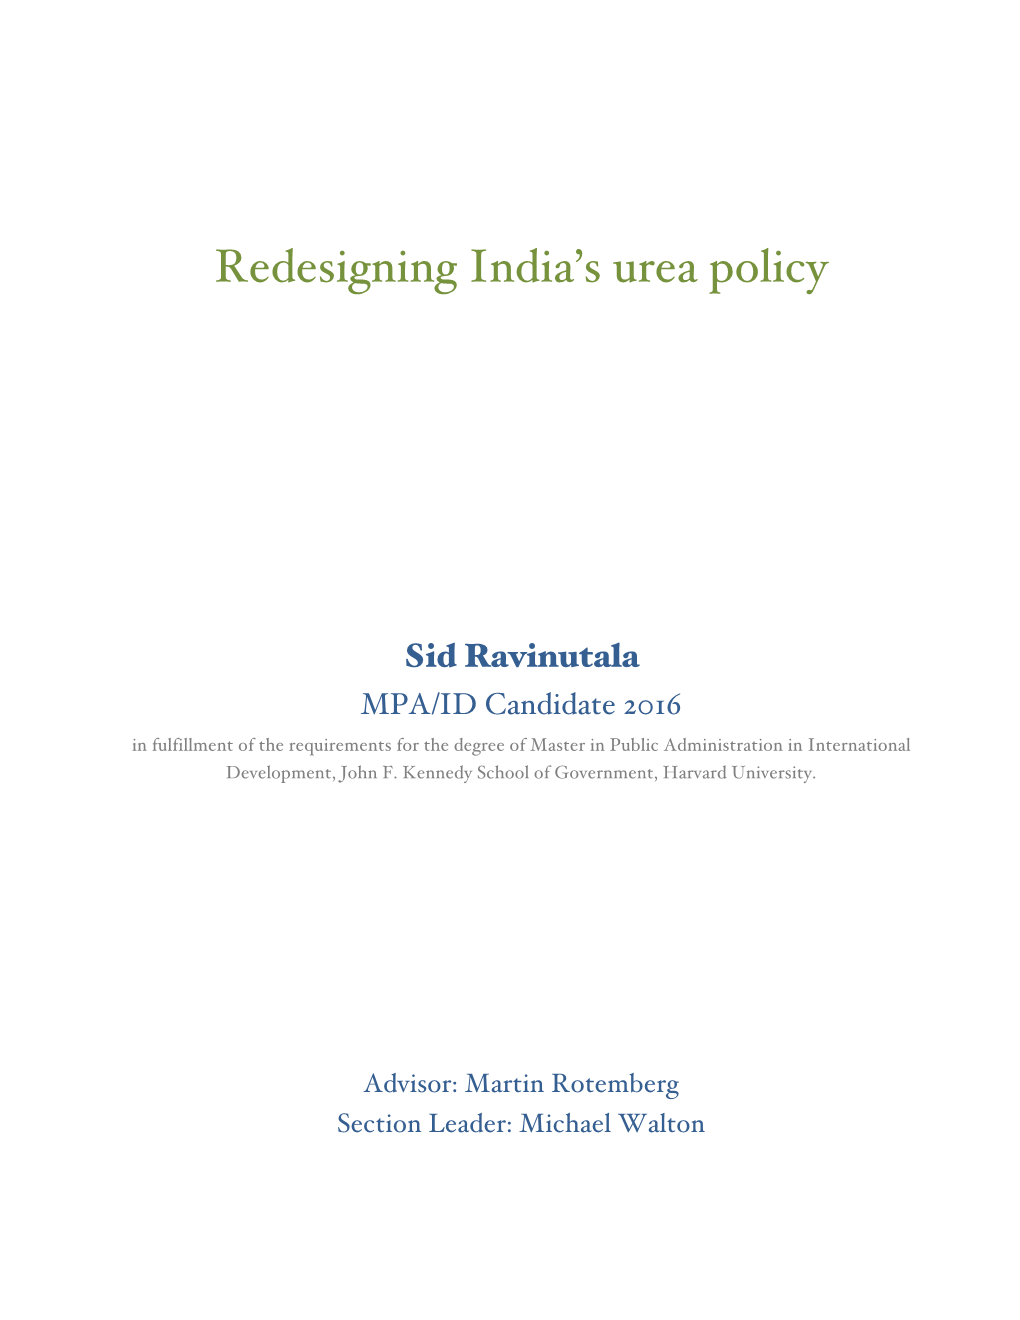 Redesigning India's Urea Policy